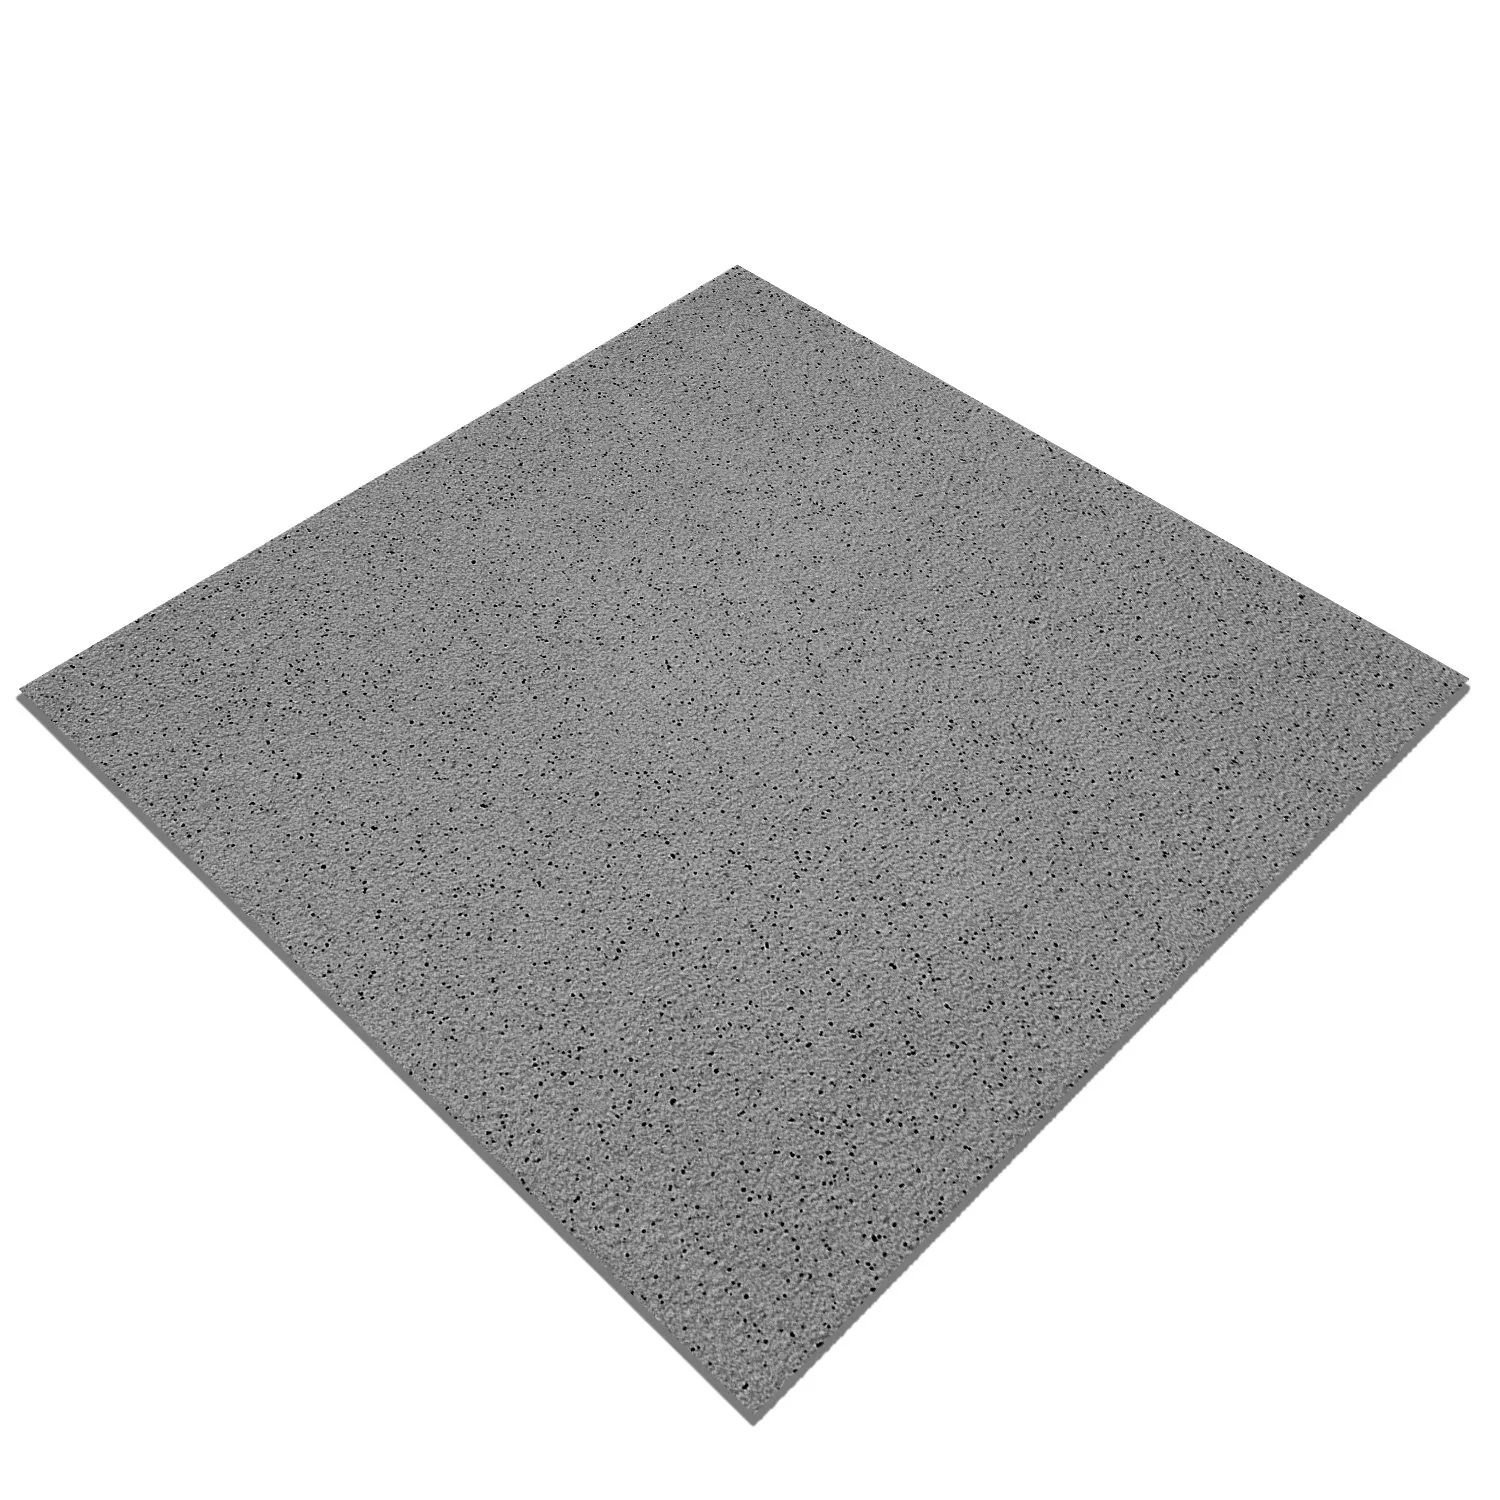 Sample Floor Tiles Fine Grain R11/B Anthracite 15x15cm